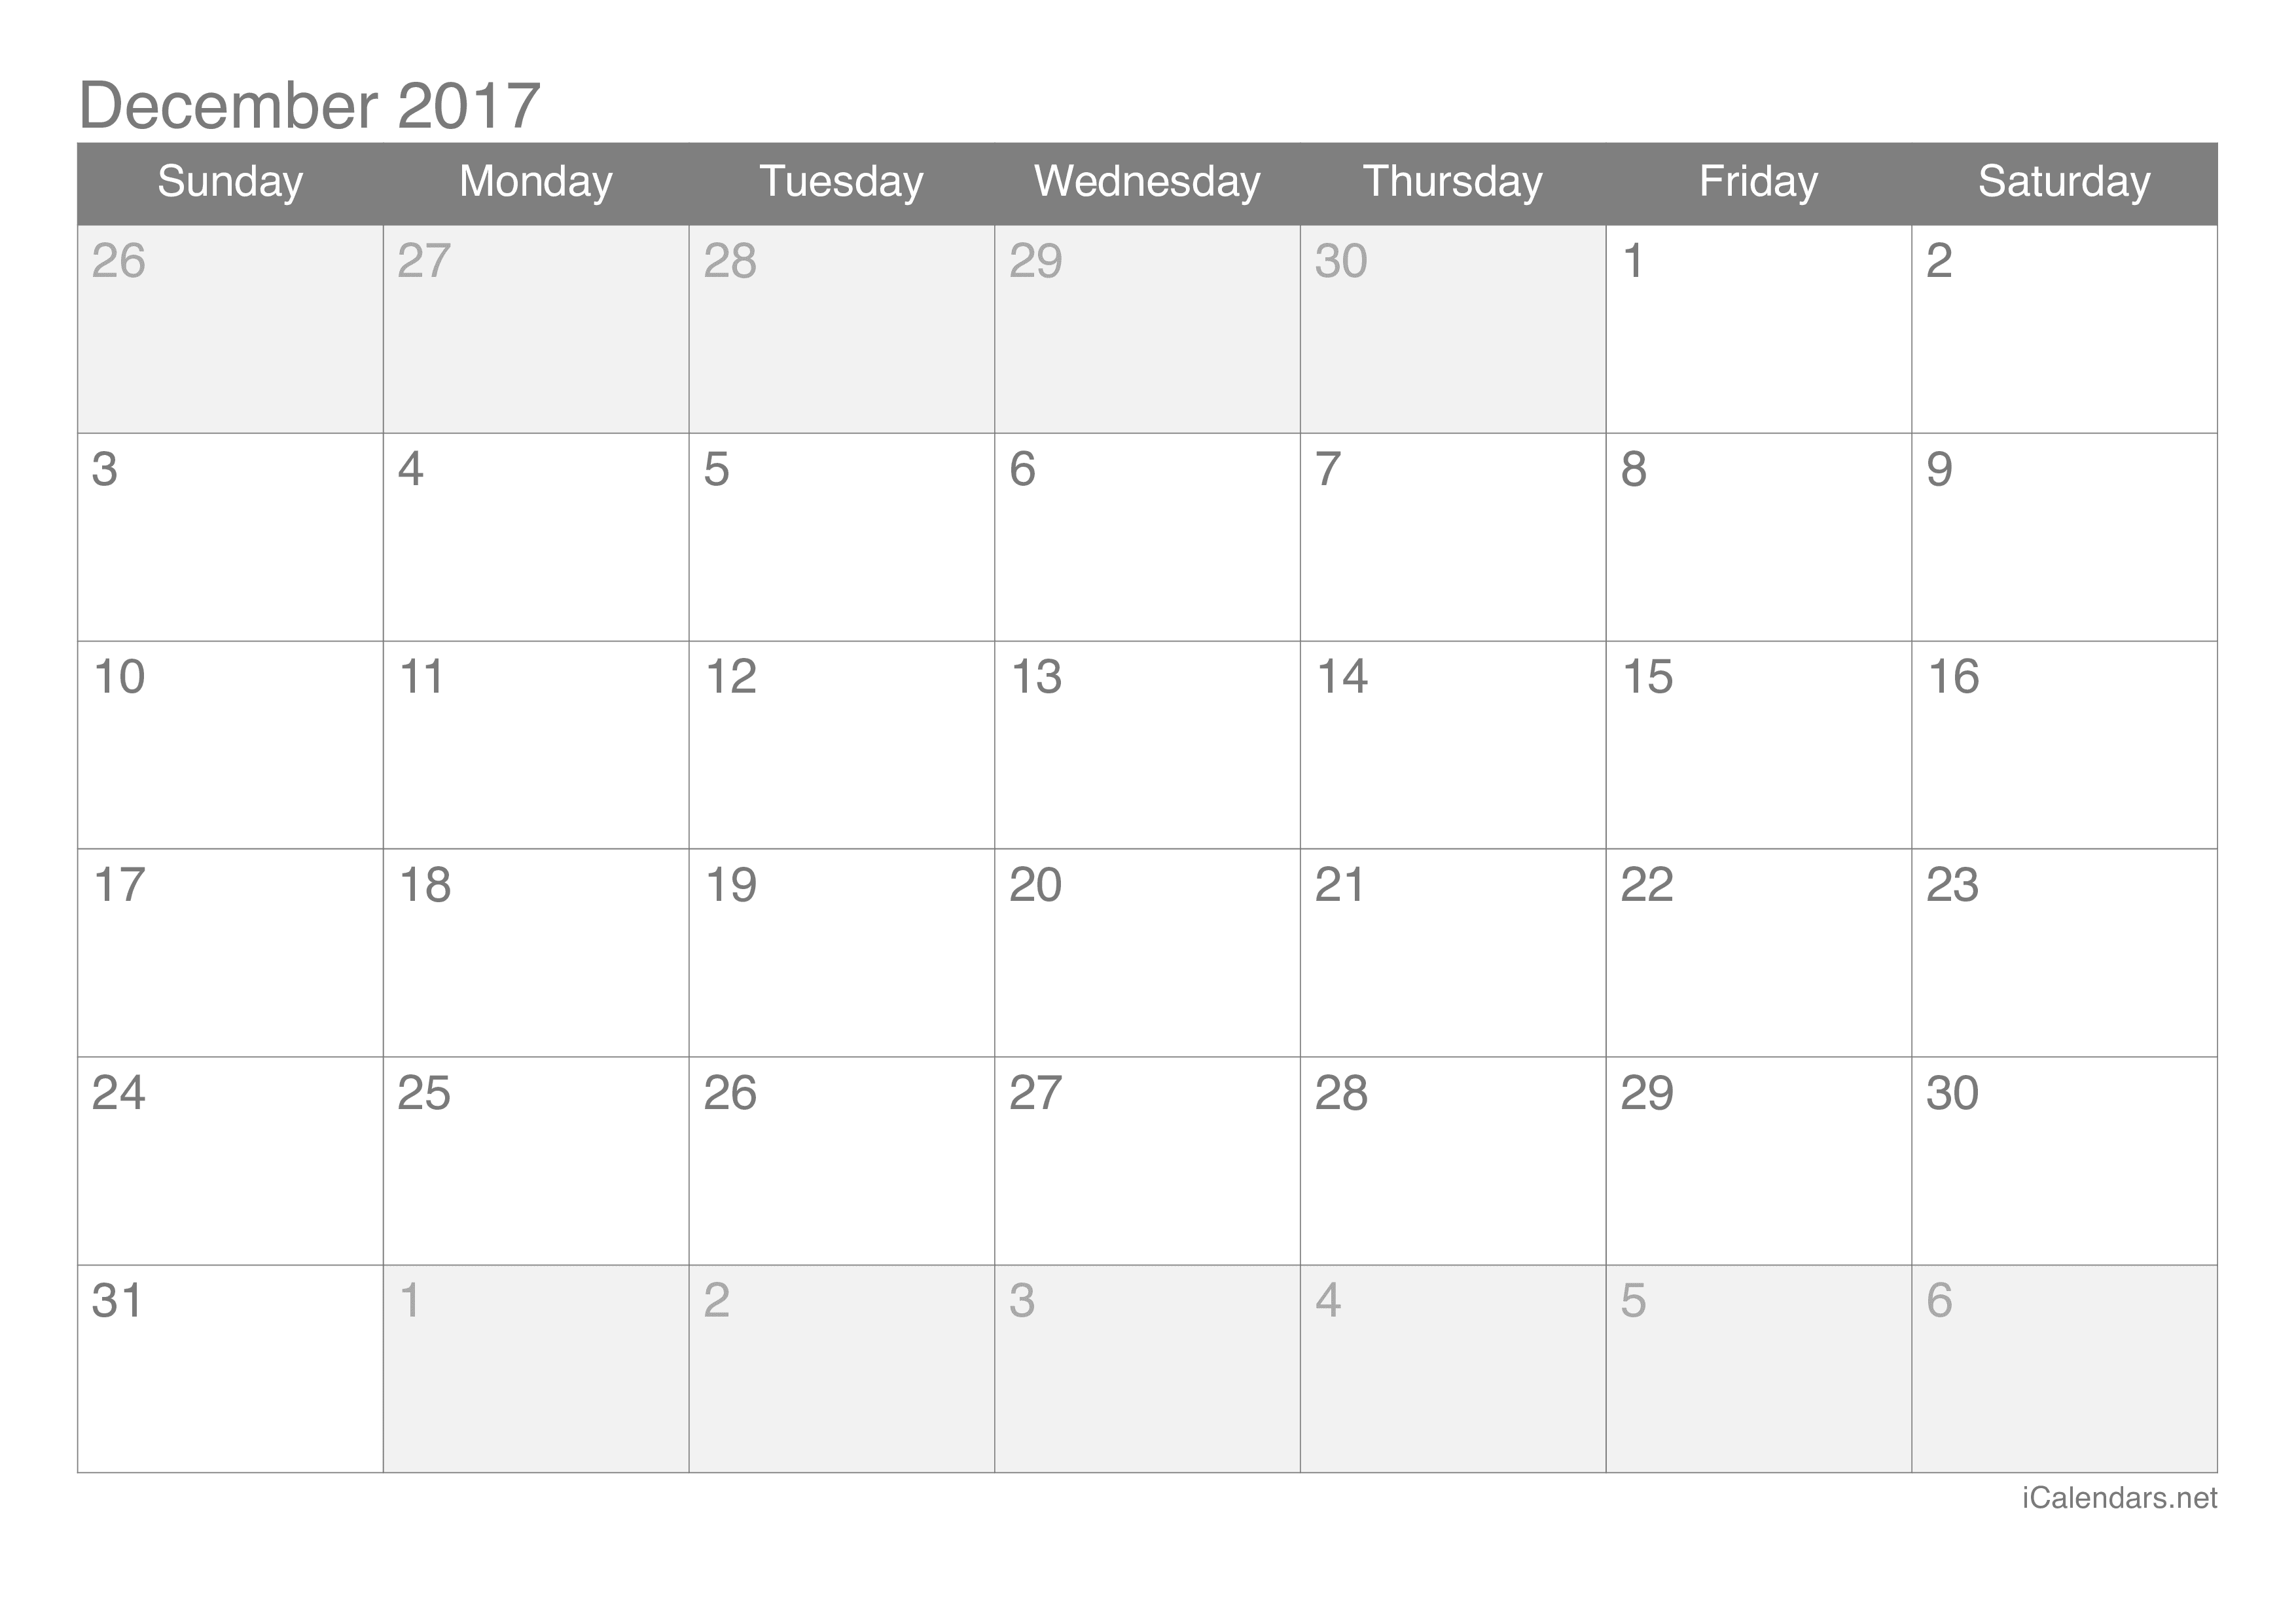 december-2017-singapore-tamil-calendar-download-singapore-tamil